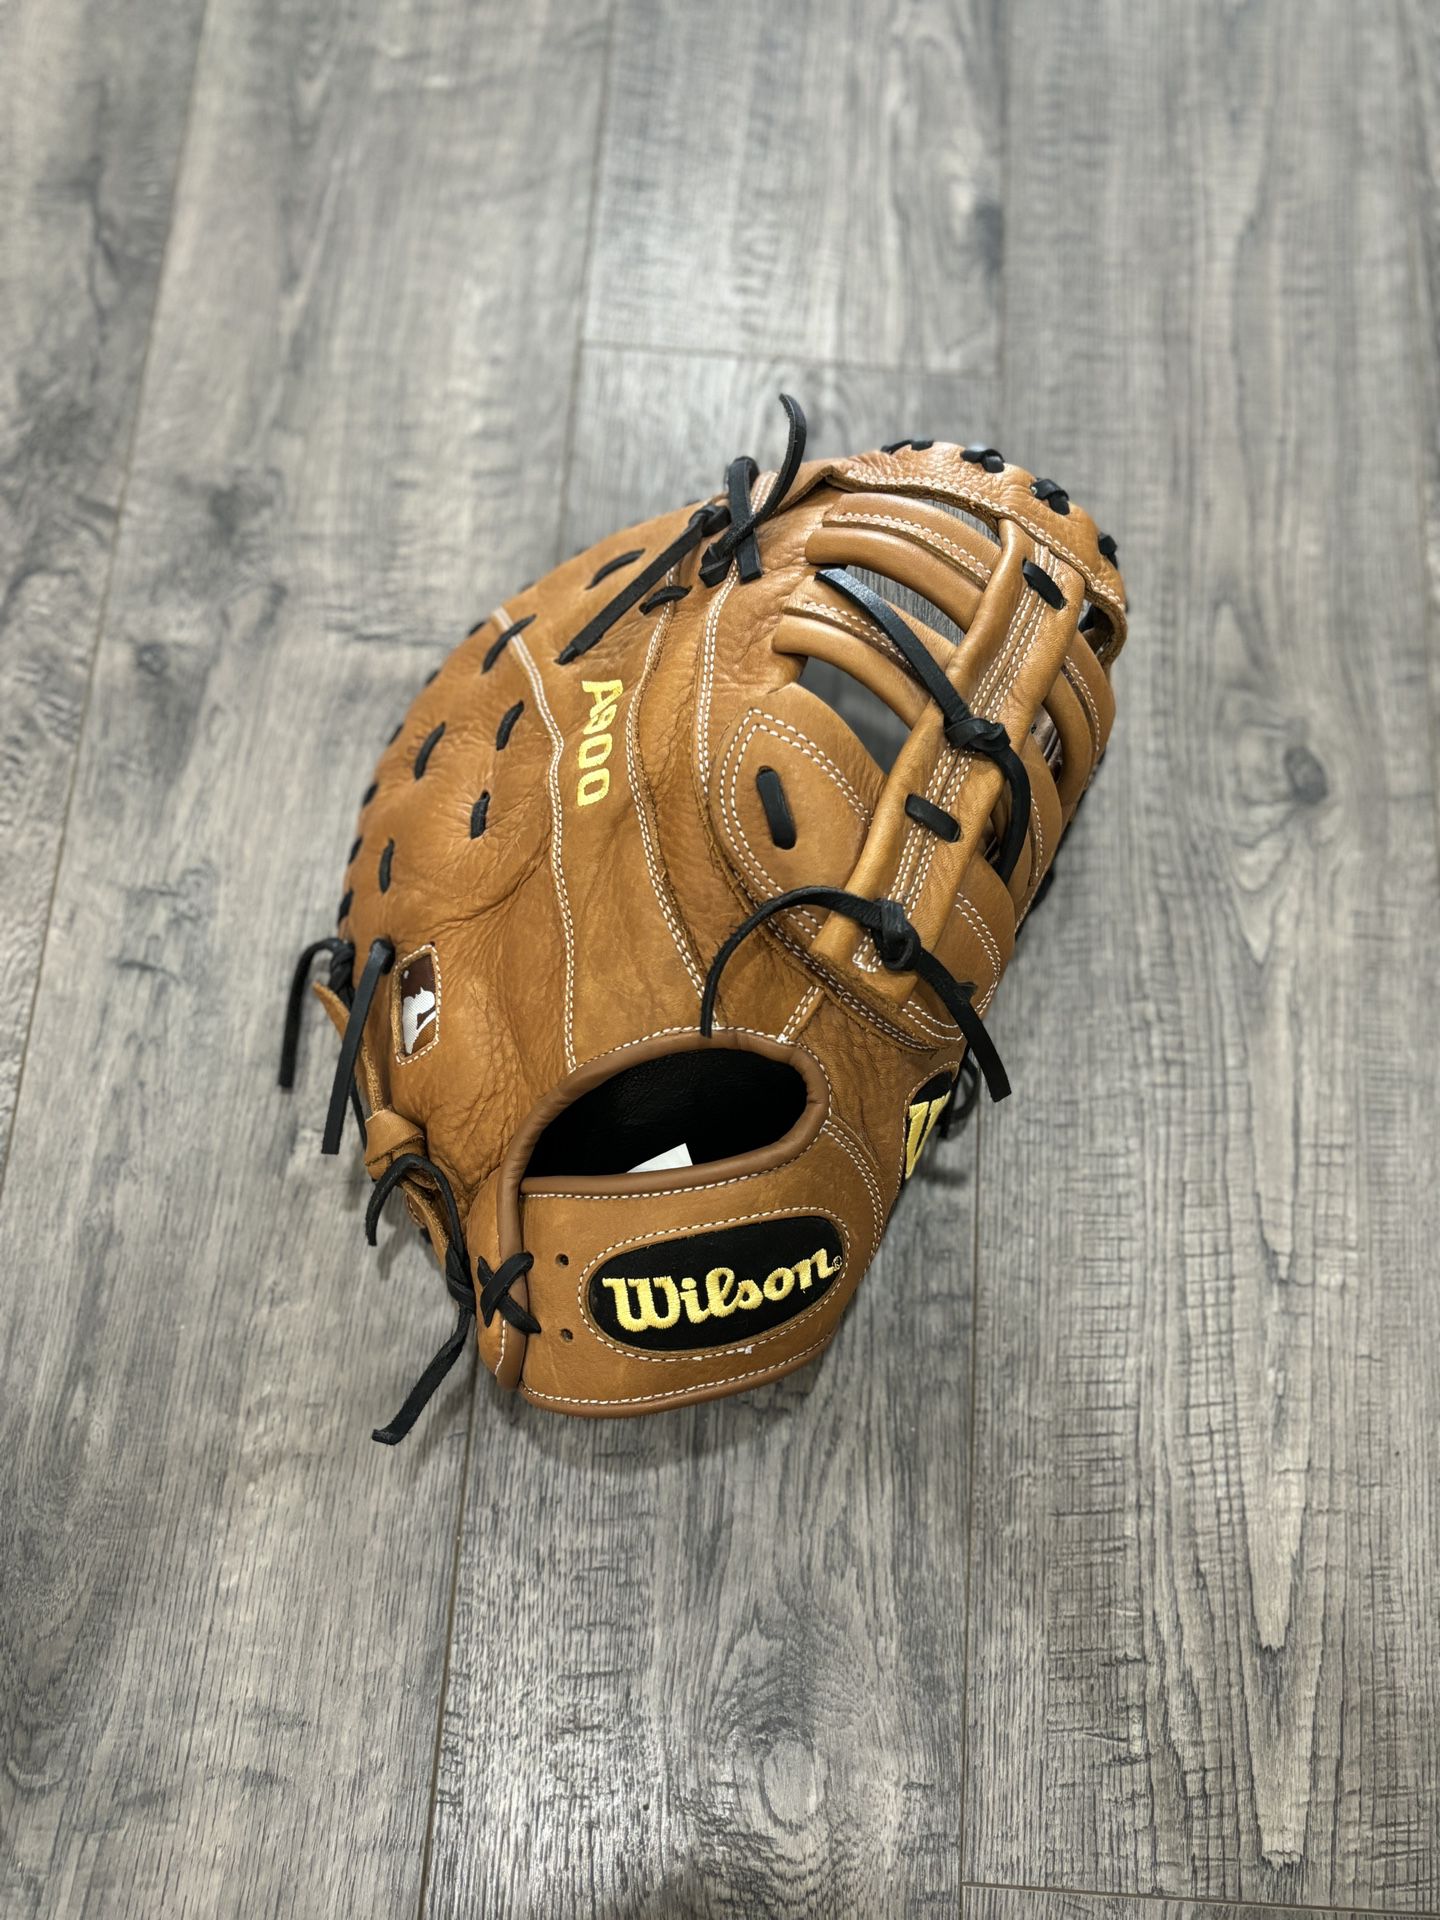 Wilson A900 First Base Glove 12” RHT Right Hand Throw